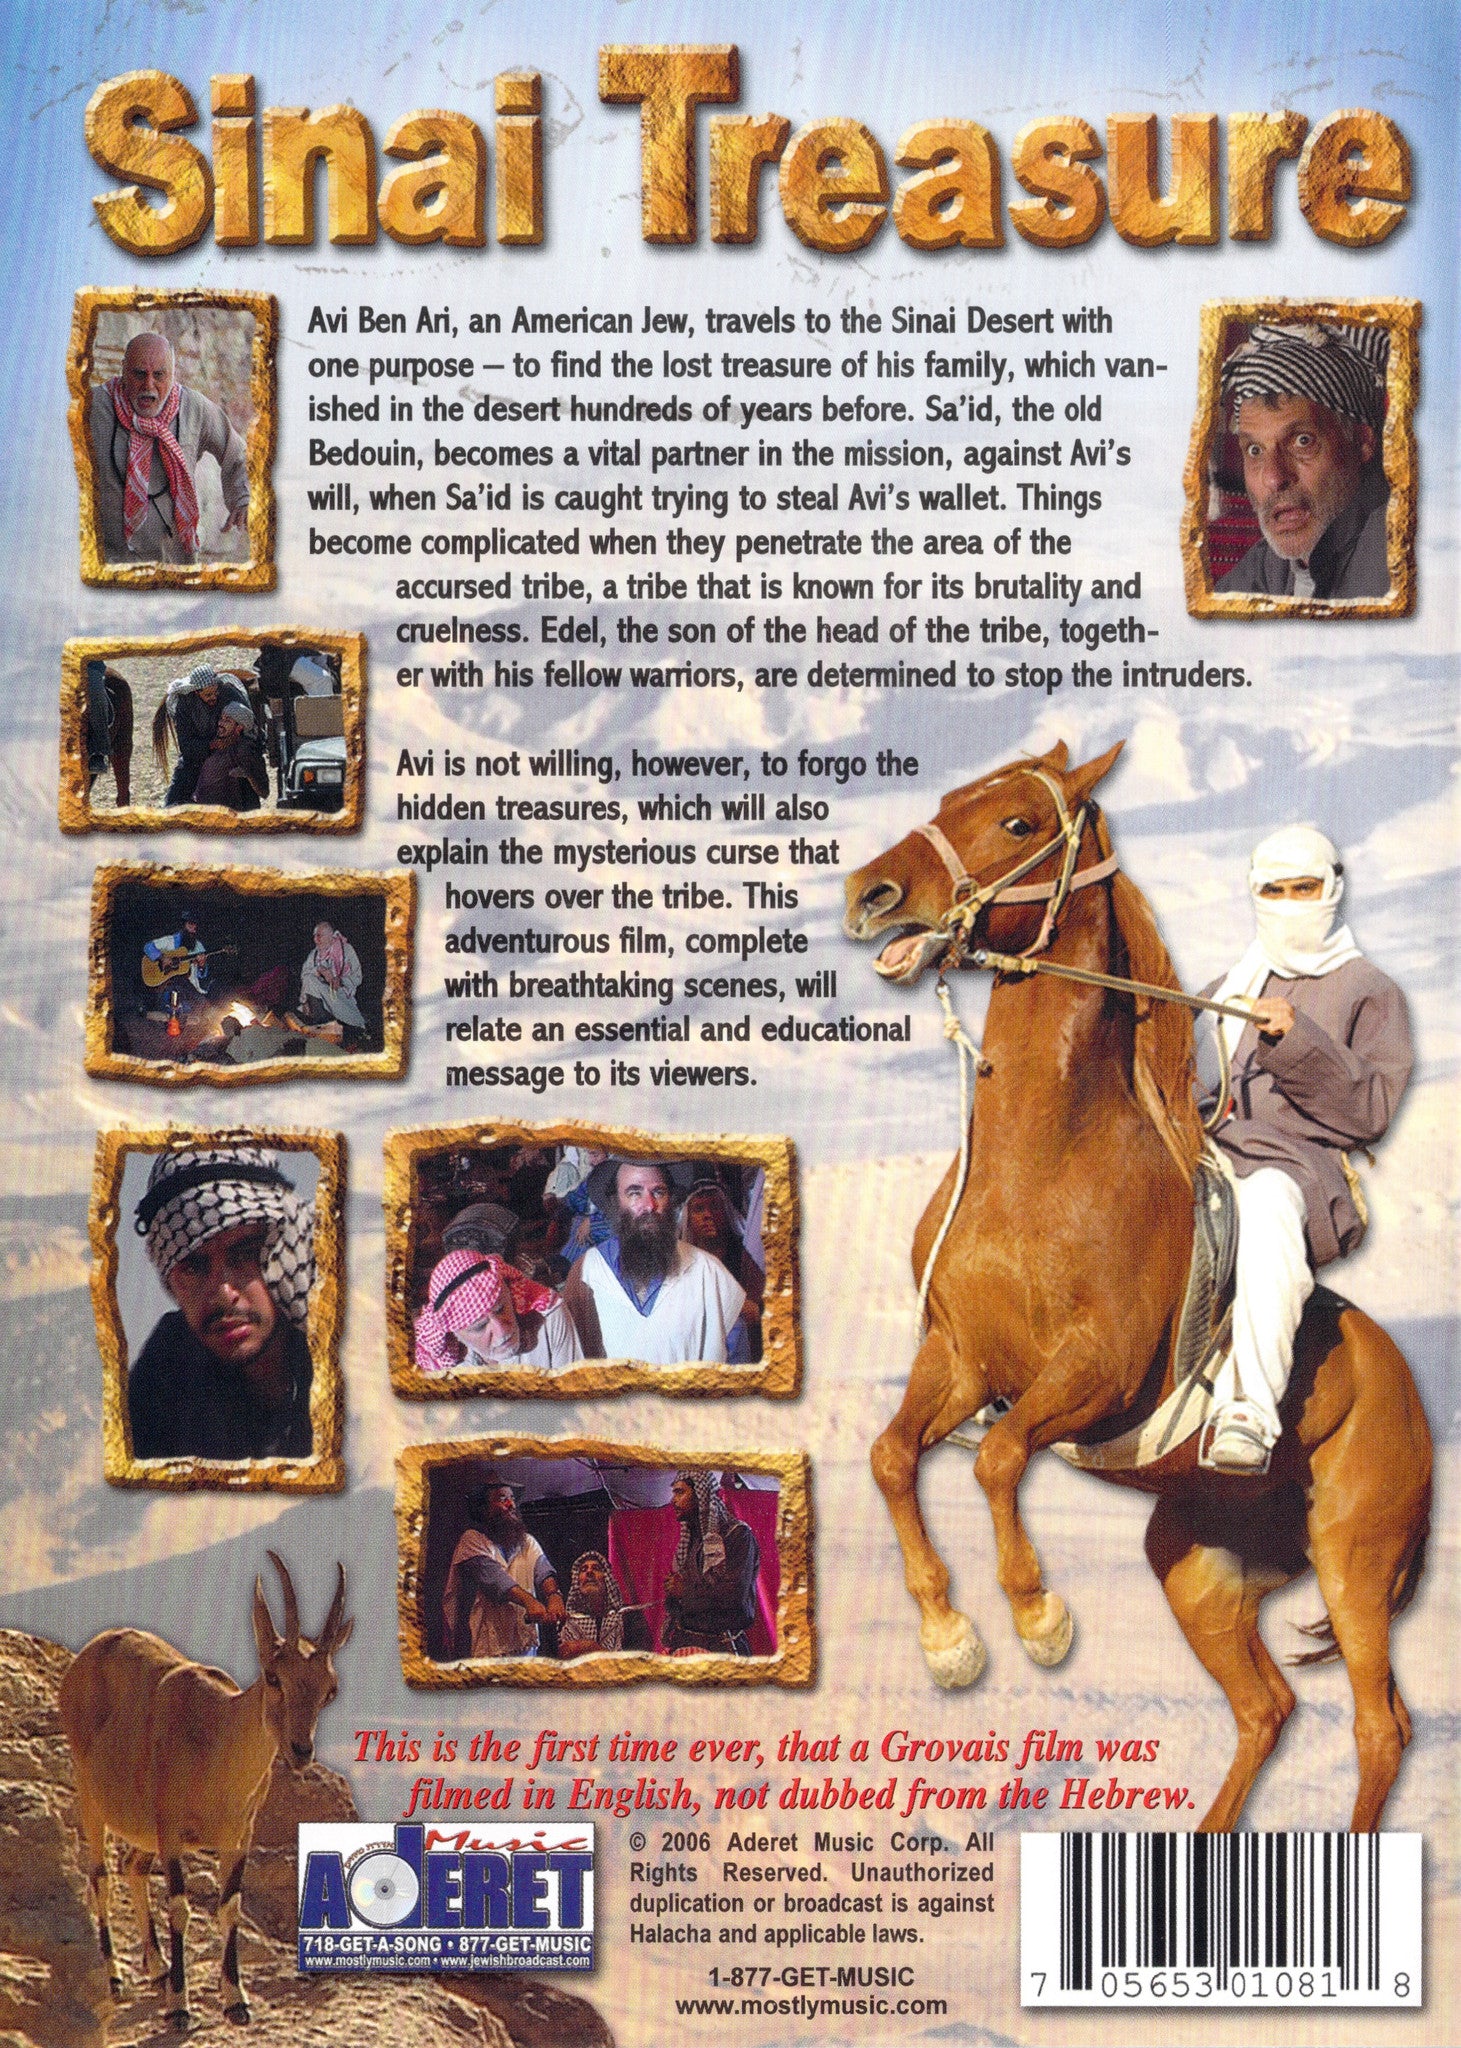 Growise Brothers - The Sinai Treasure